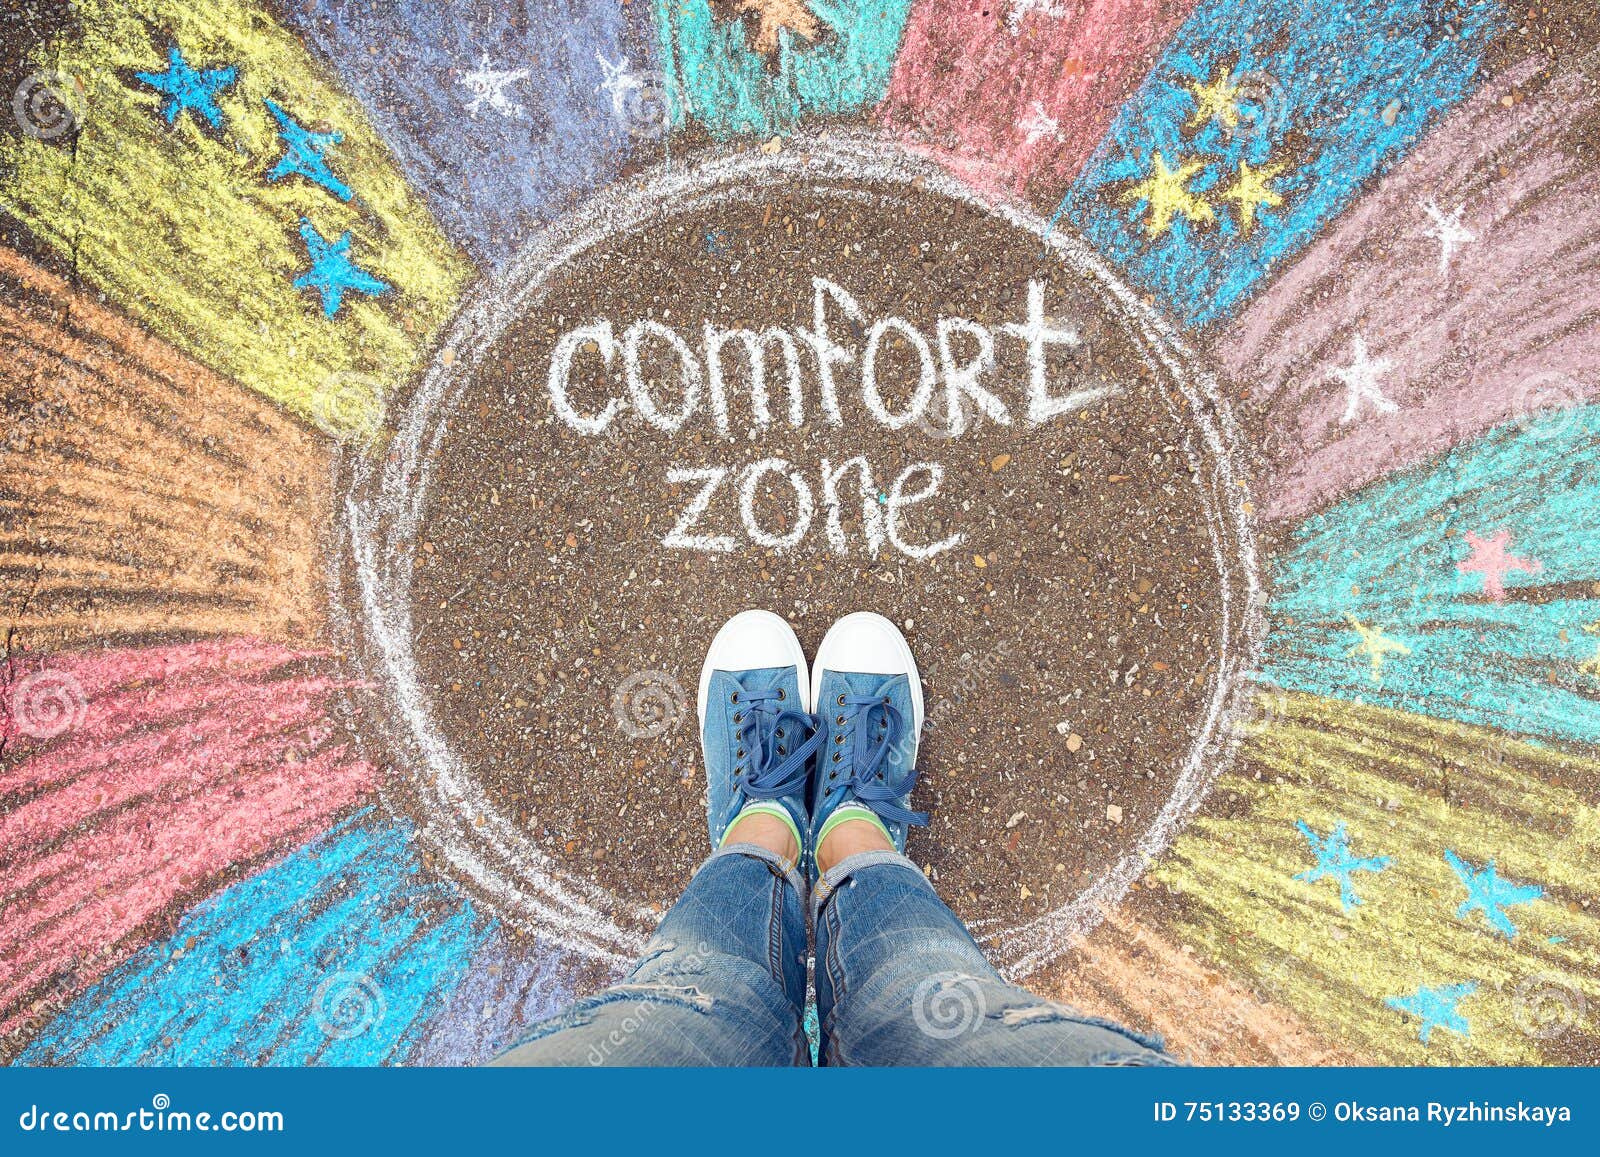 comfort zone concept. feet standing inside comfort zone circle.